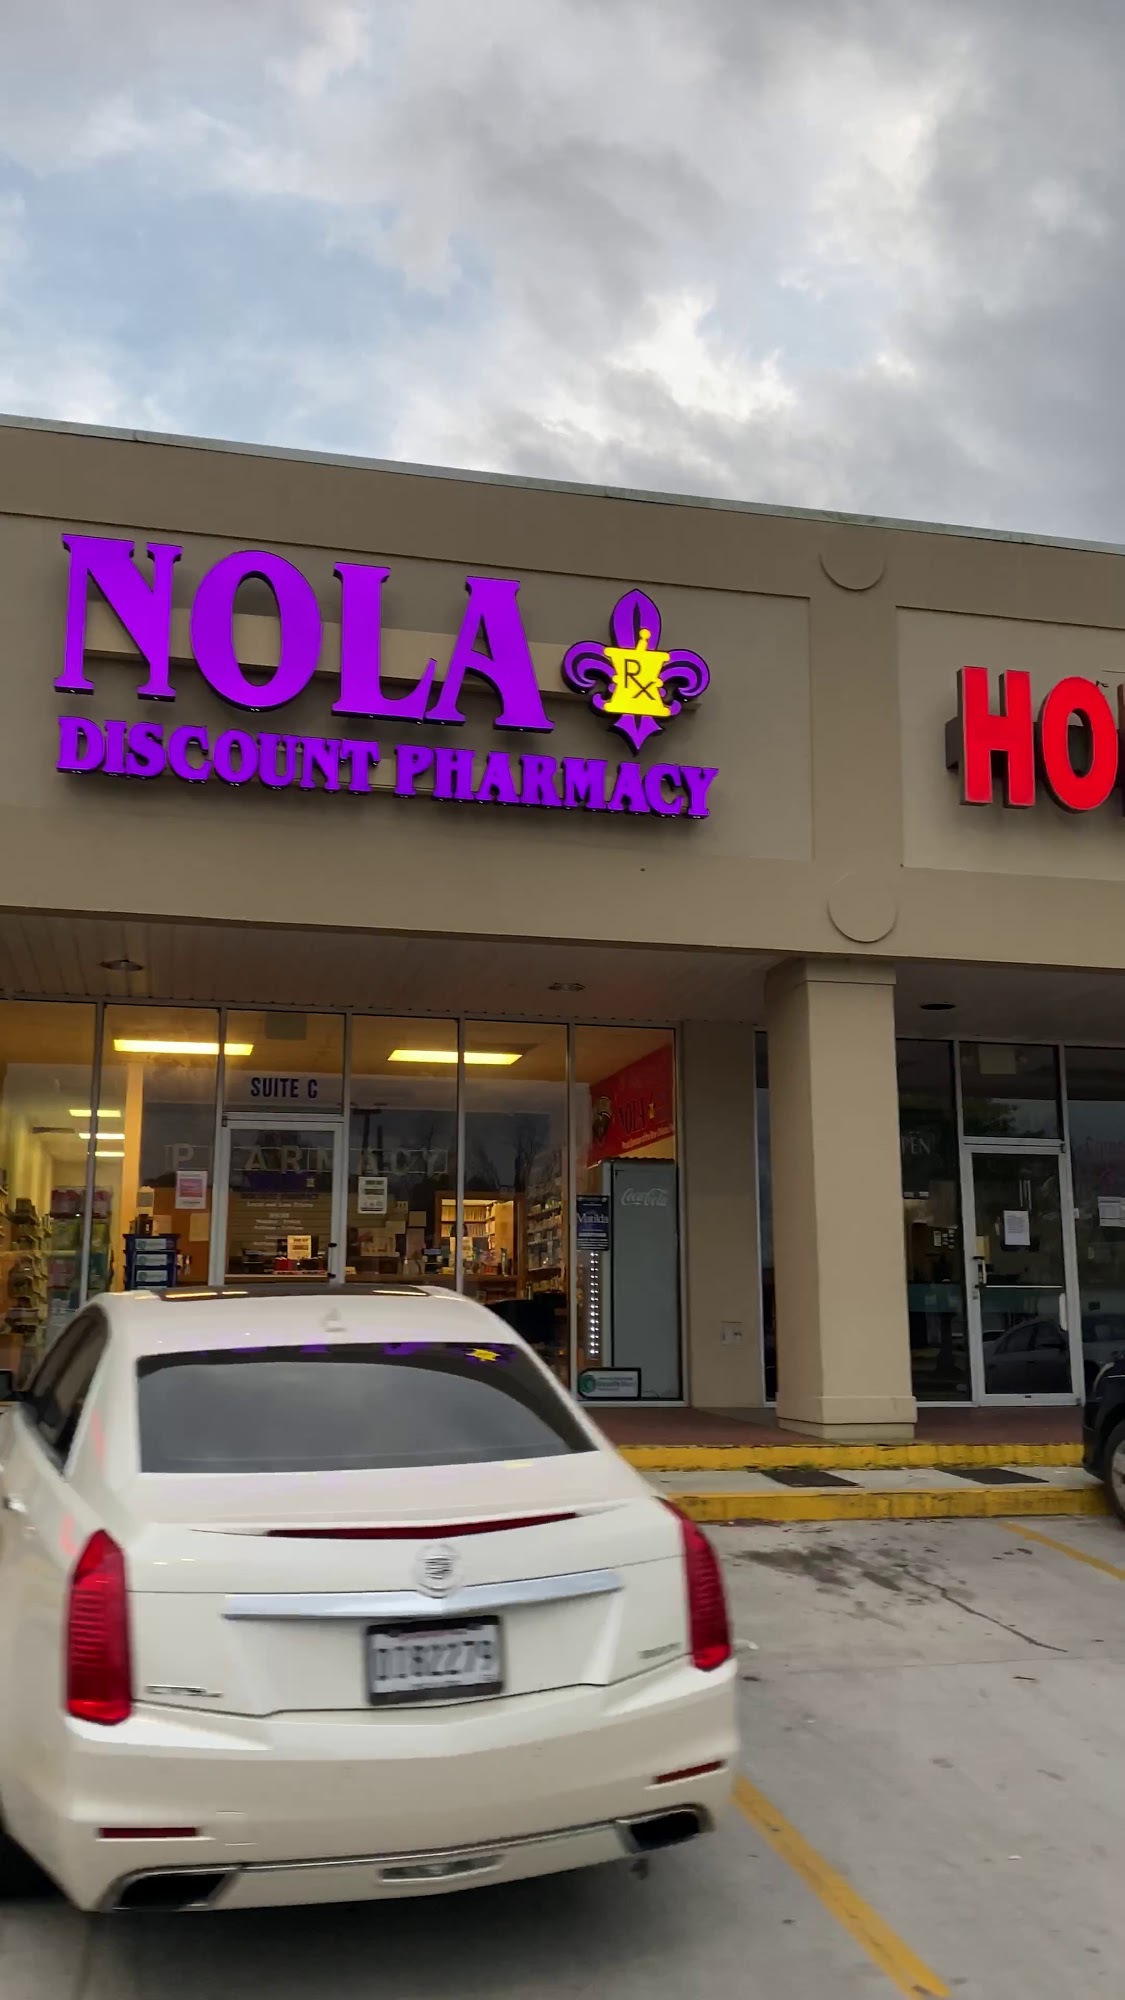 Nola Discount Pharmacy of Destrehan